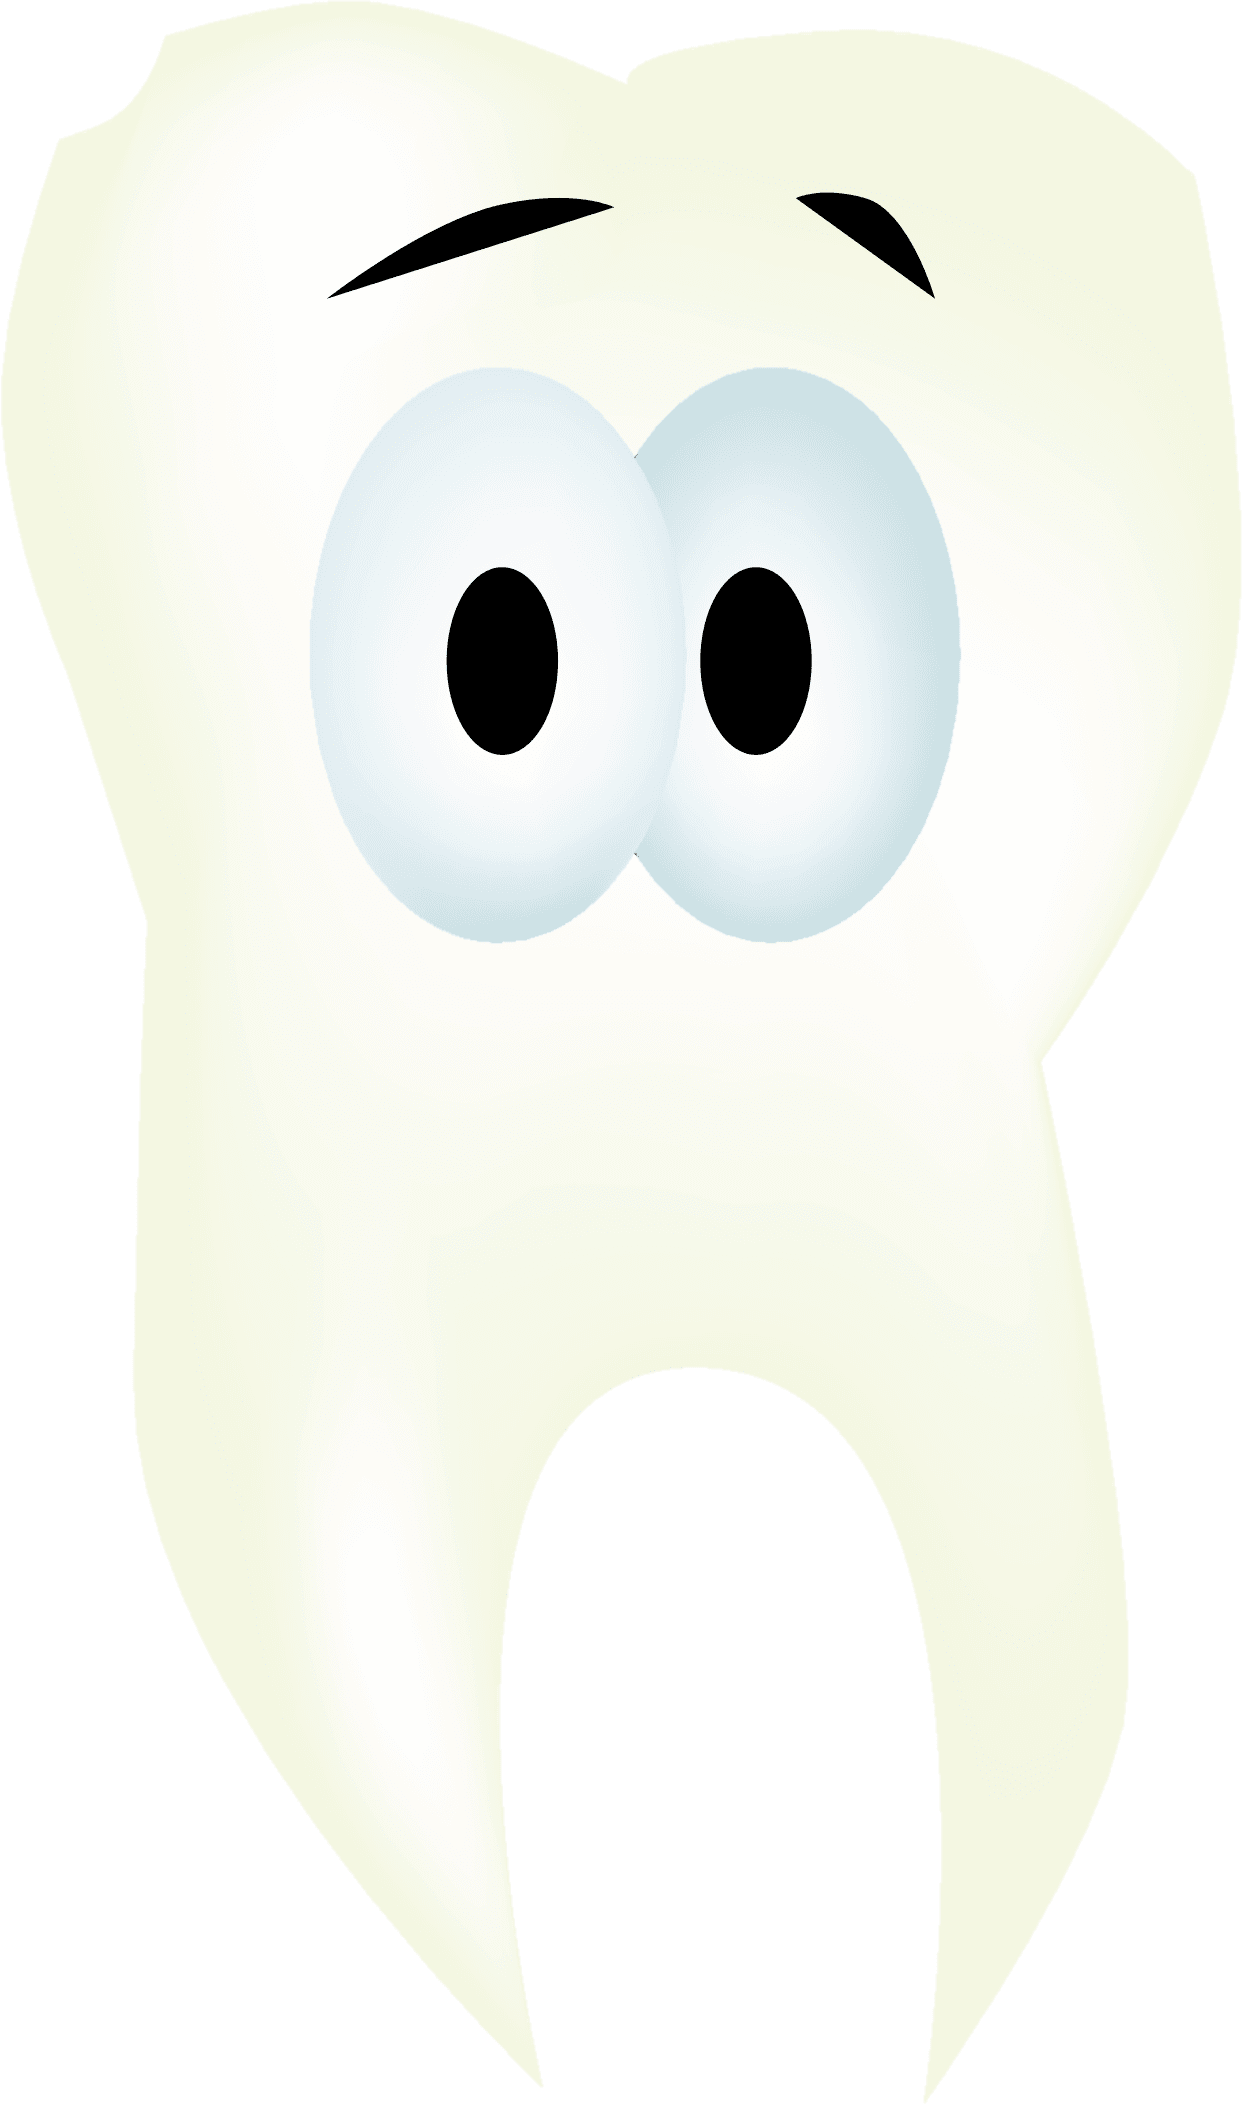 Teeth healthy tooth vector clipart image photo